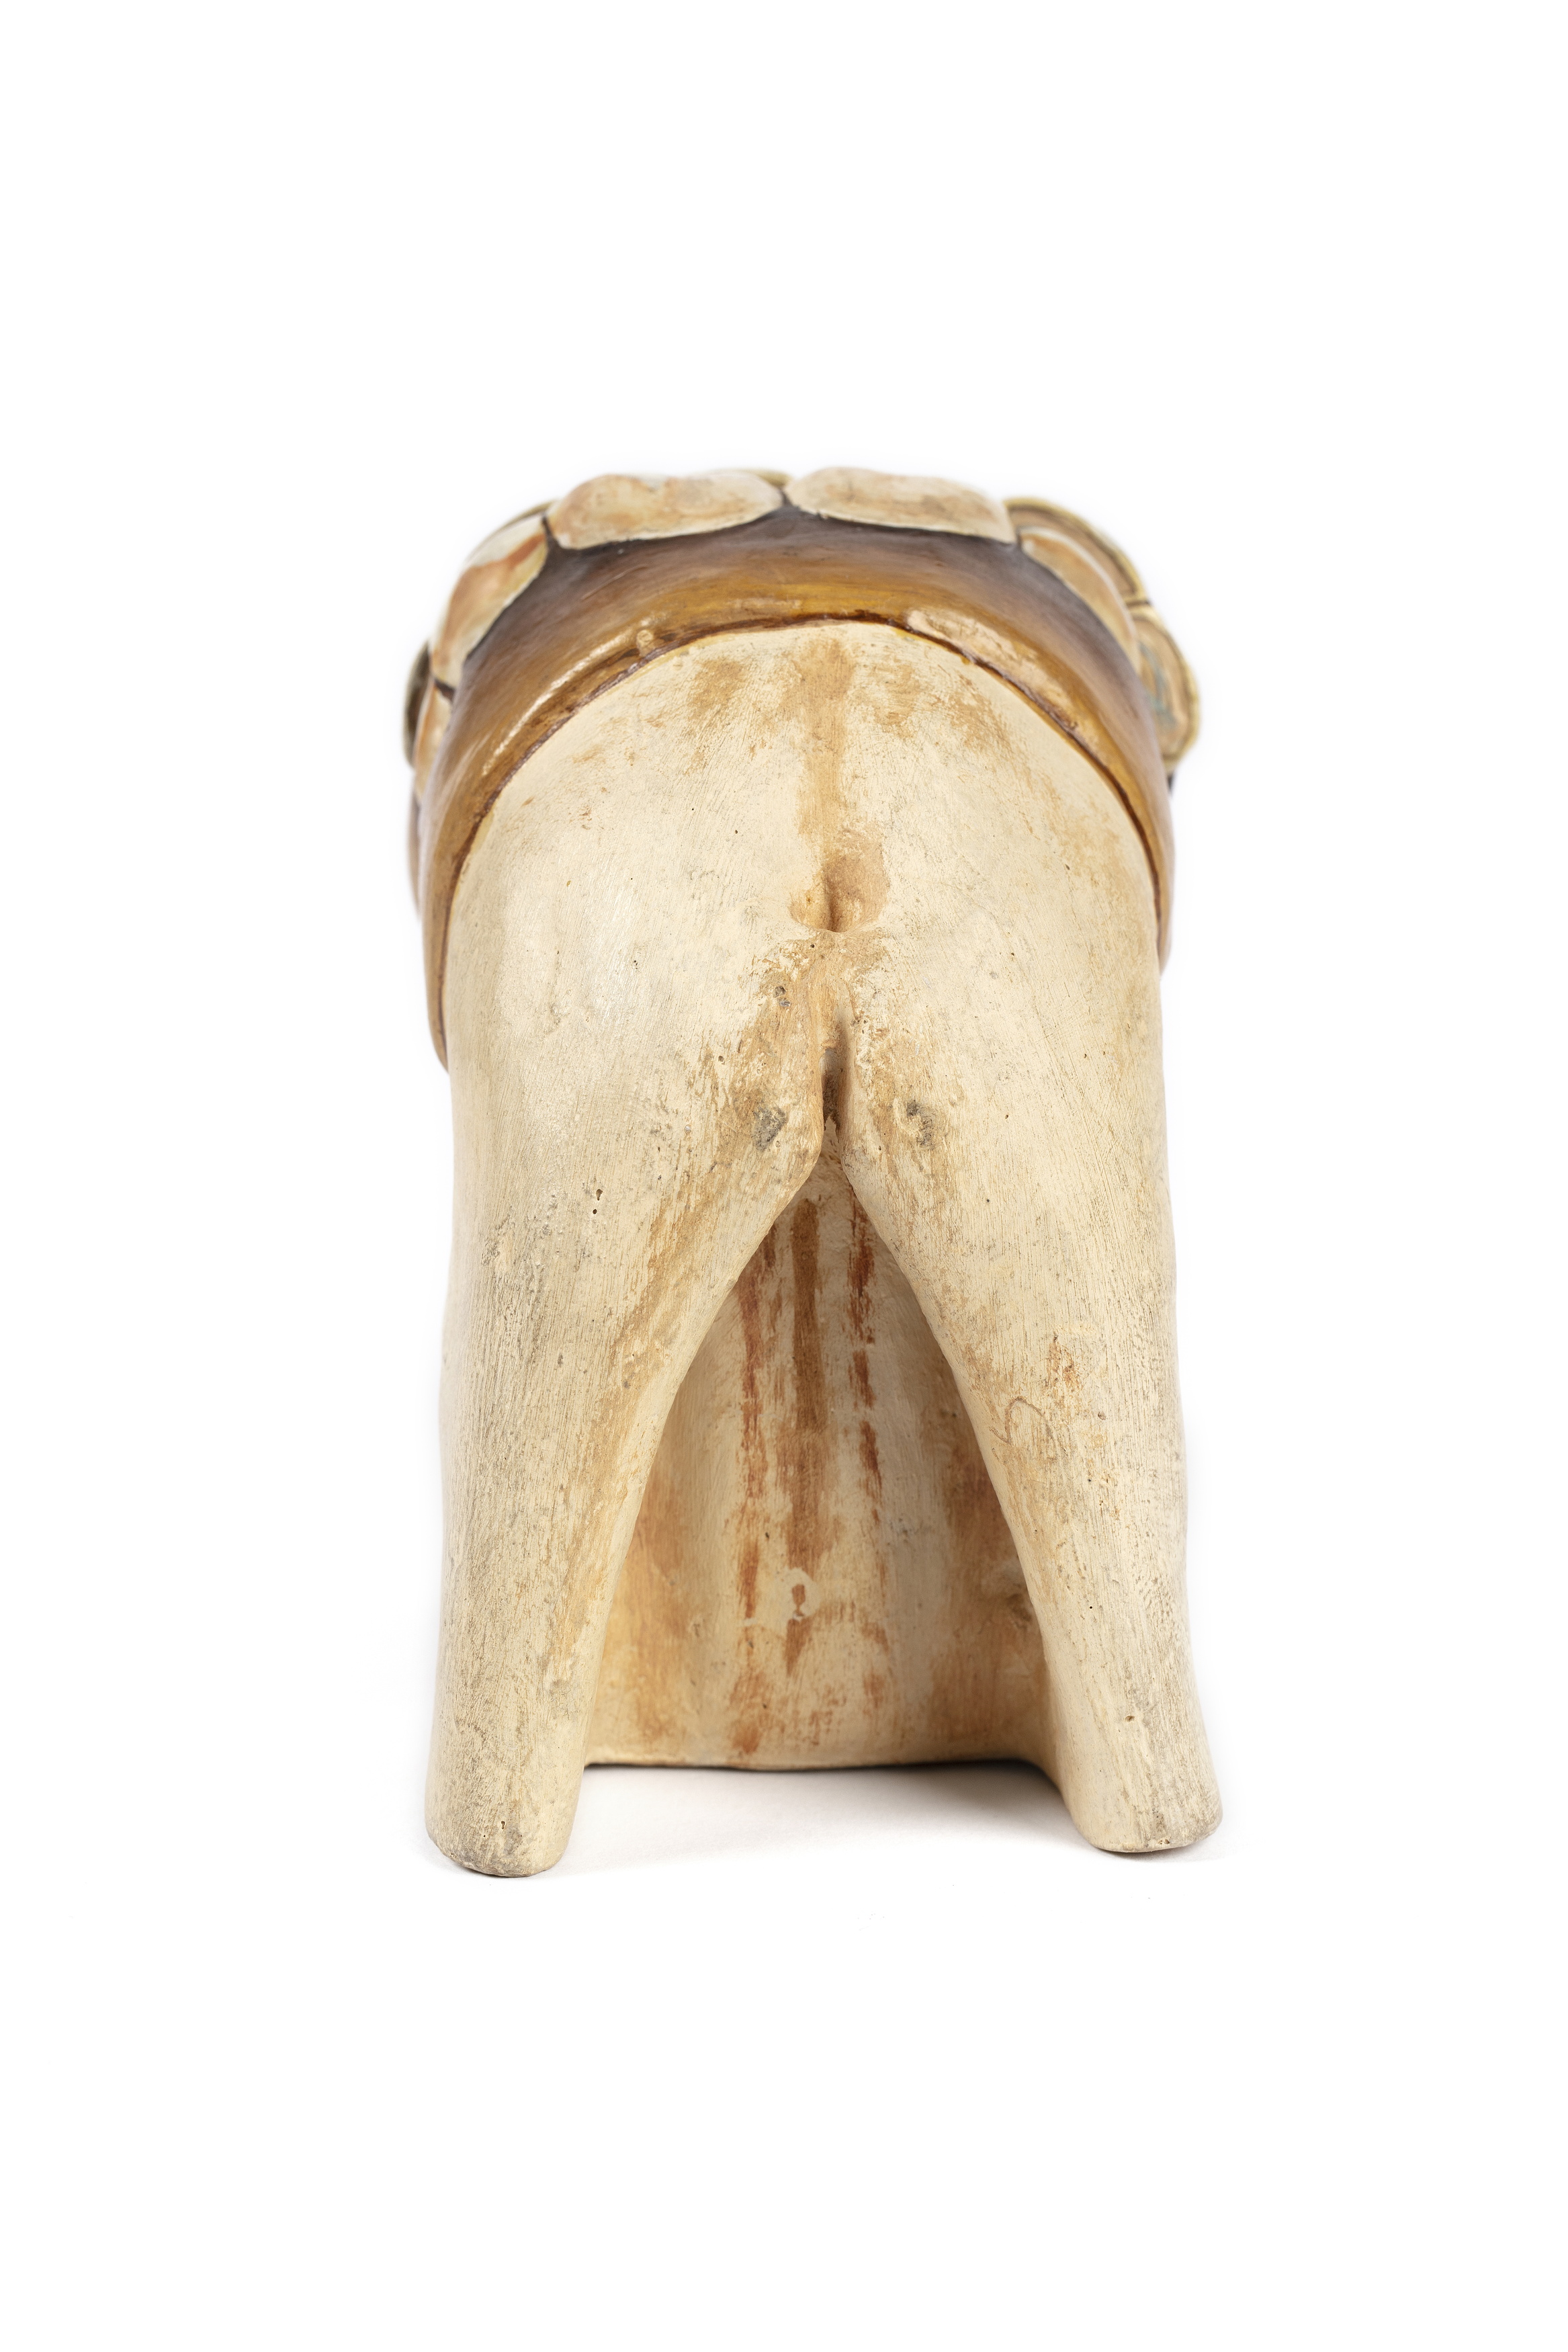 Cast of horse teeth set